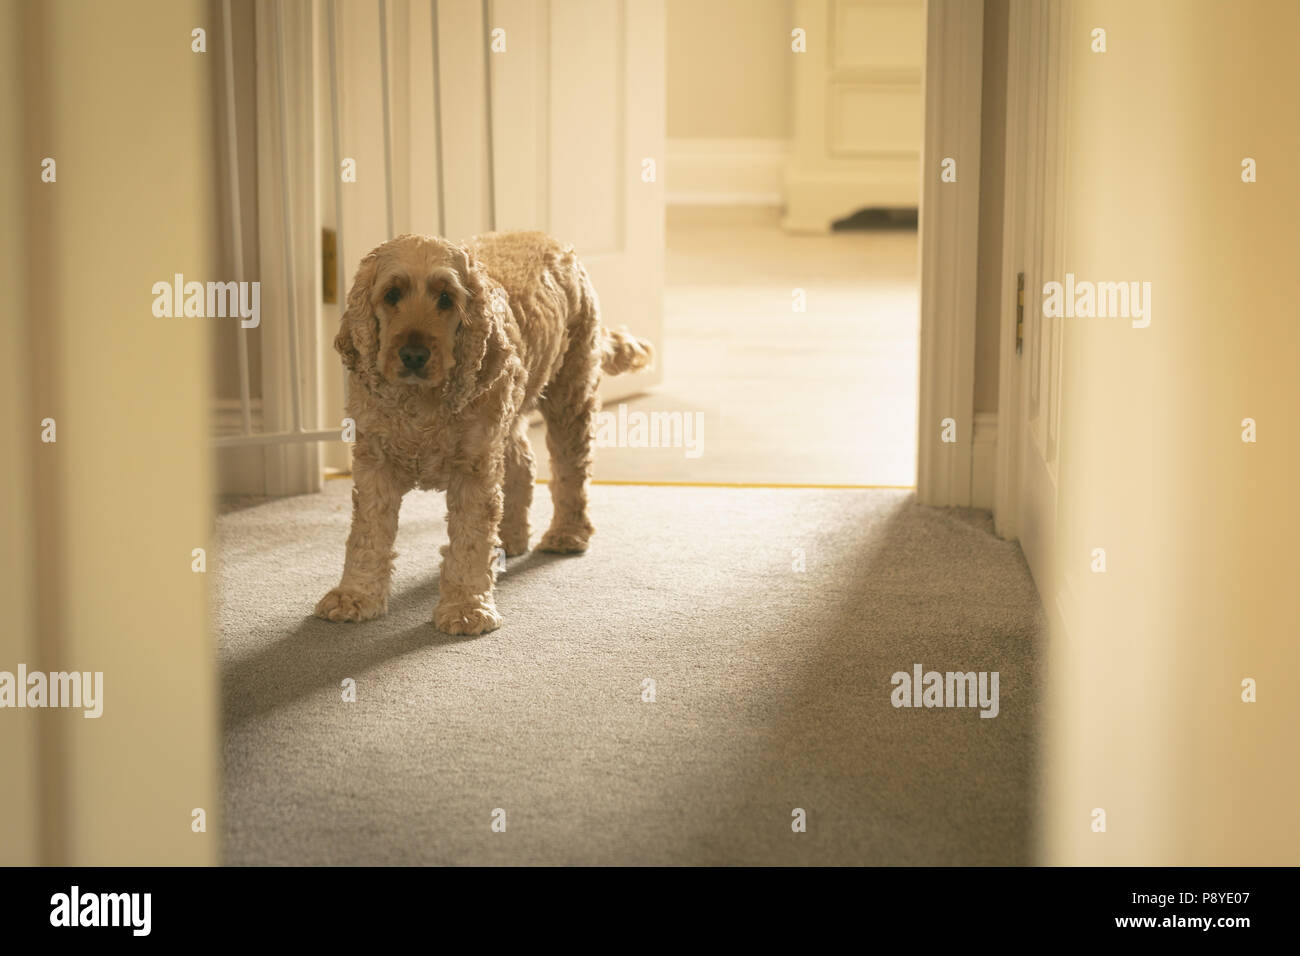 Dog standing near the door Stock Photo